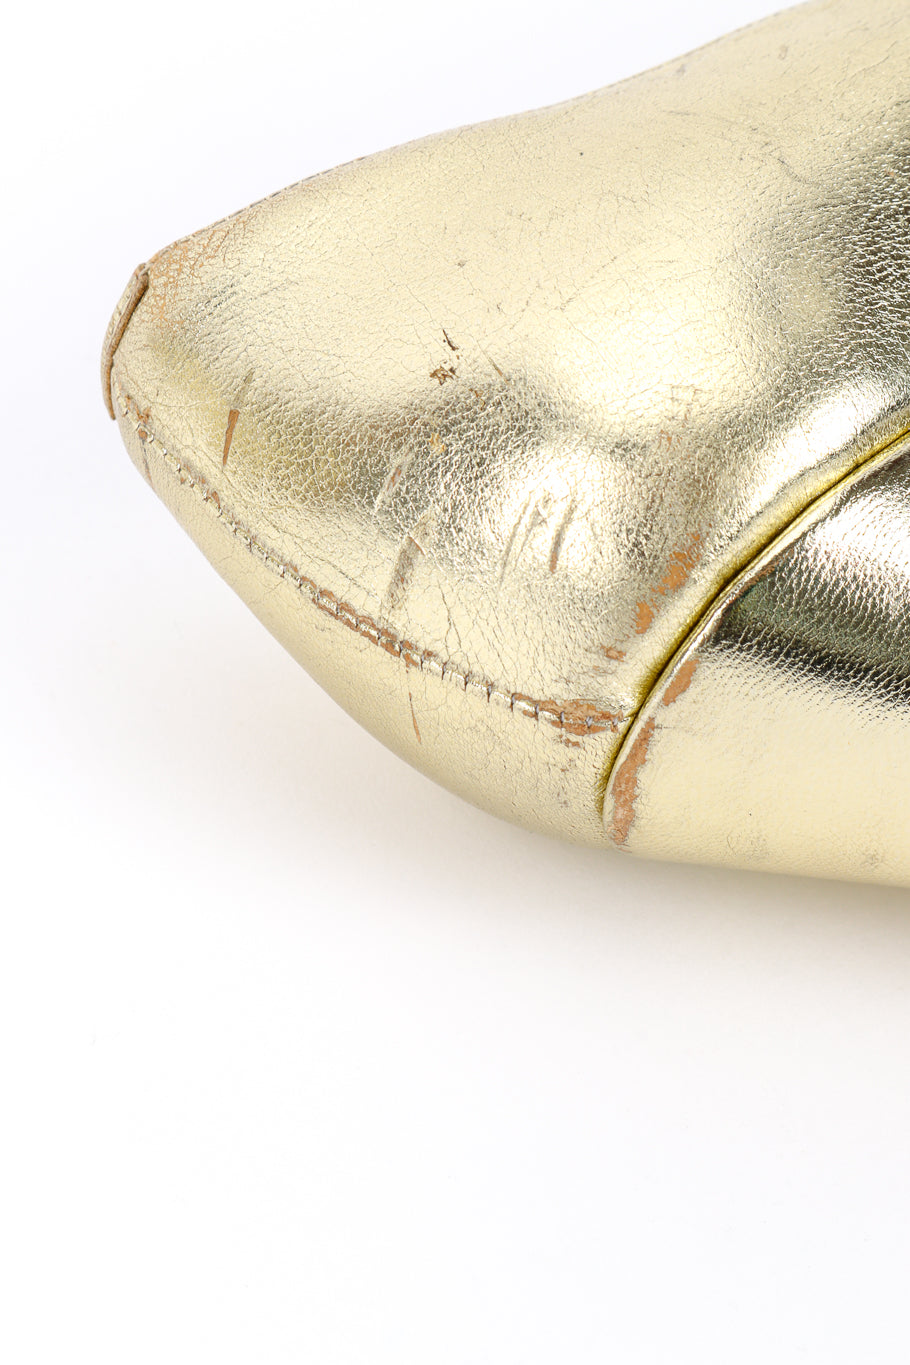 Vintage Vivienne Westwood 1993 F/W Metallic Gold Elevated Court Shoe left shoe back counter closeup @recessla